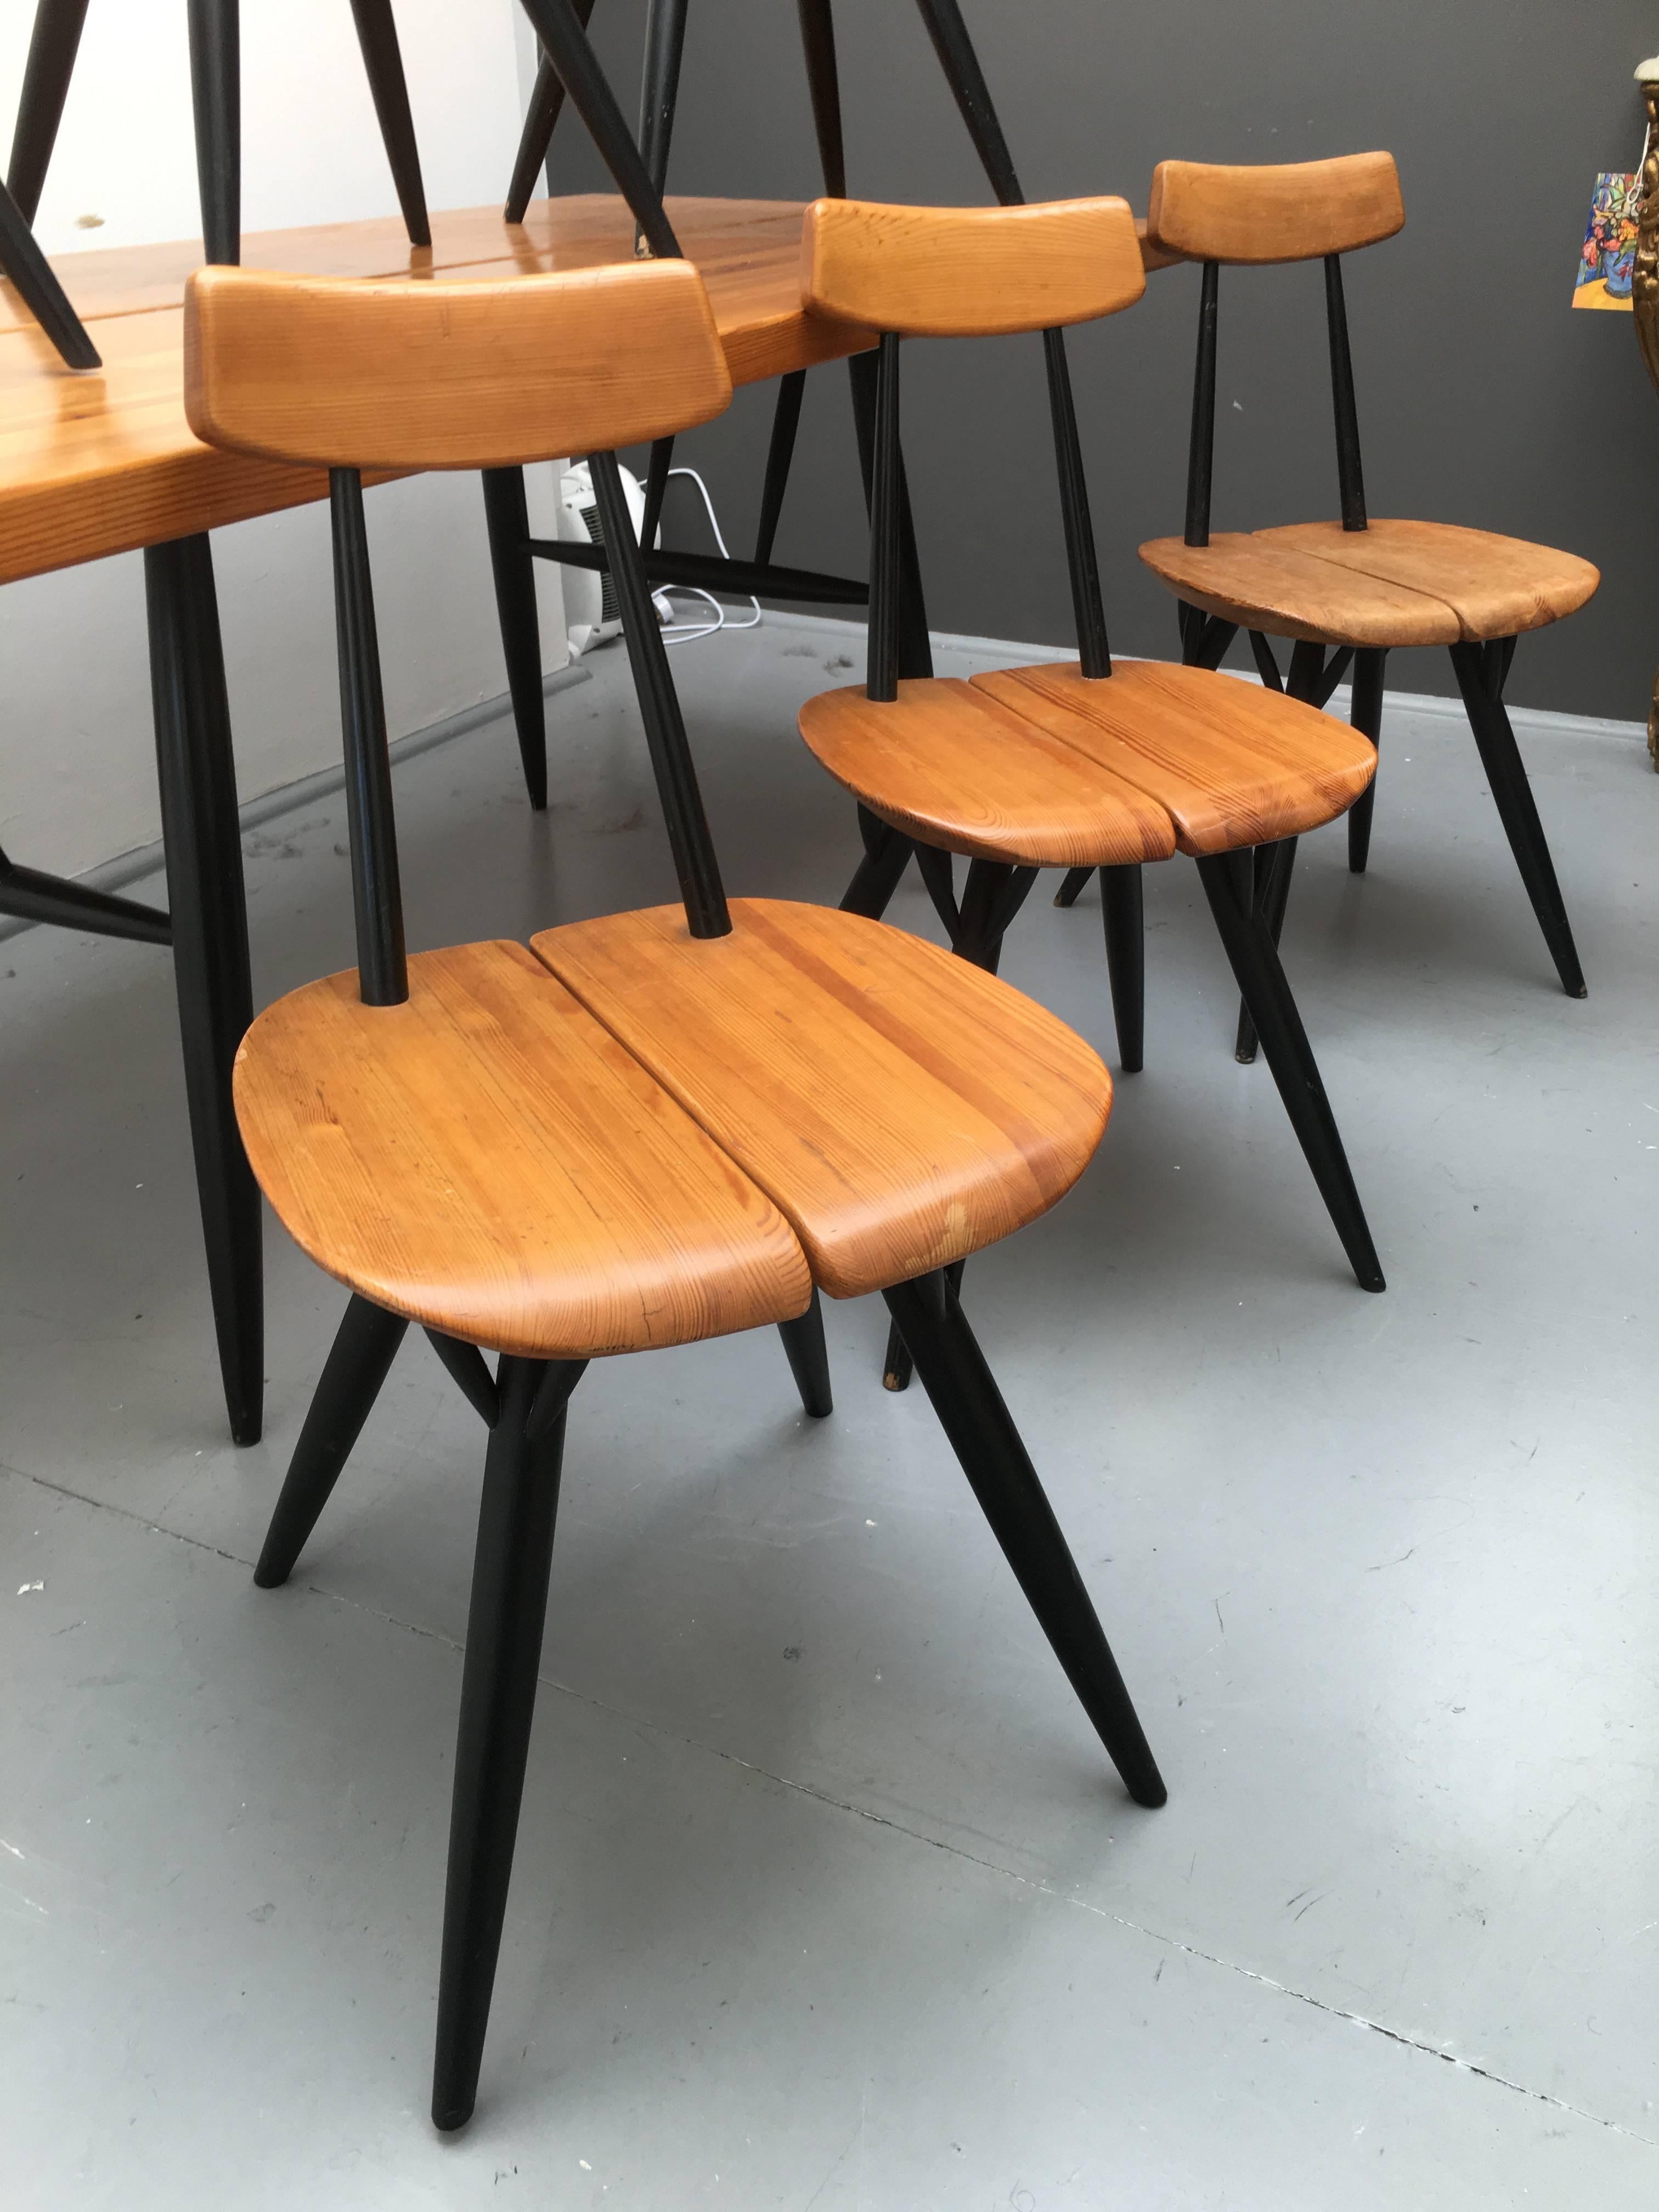 Six Pirkka Chairs by Ilmari Tapiovaara for Asko, Finnish, circa 1955 In Good Condition For Sale In London, GB